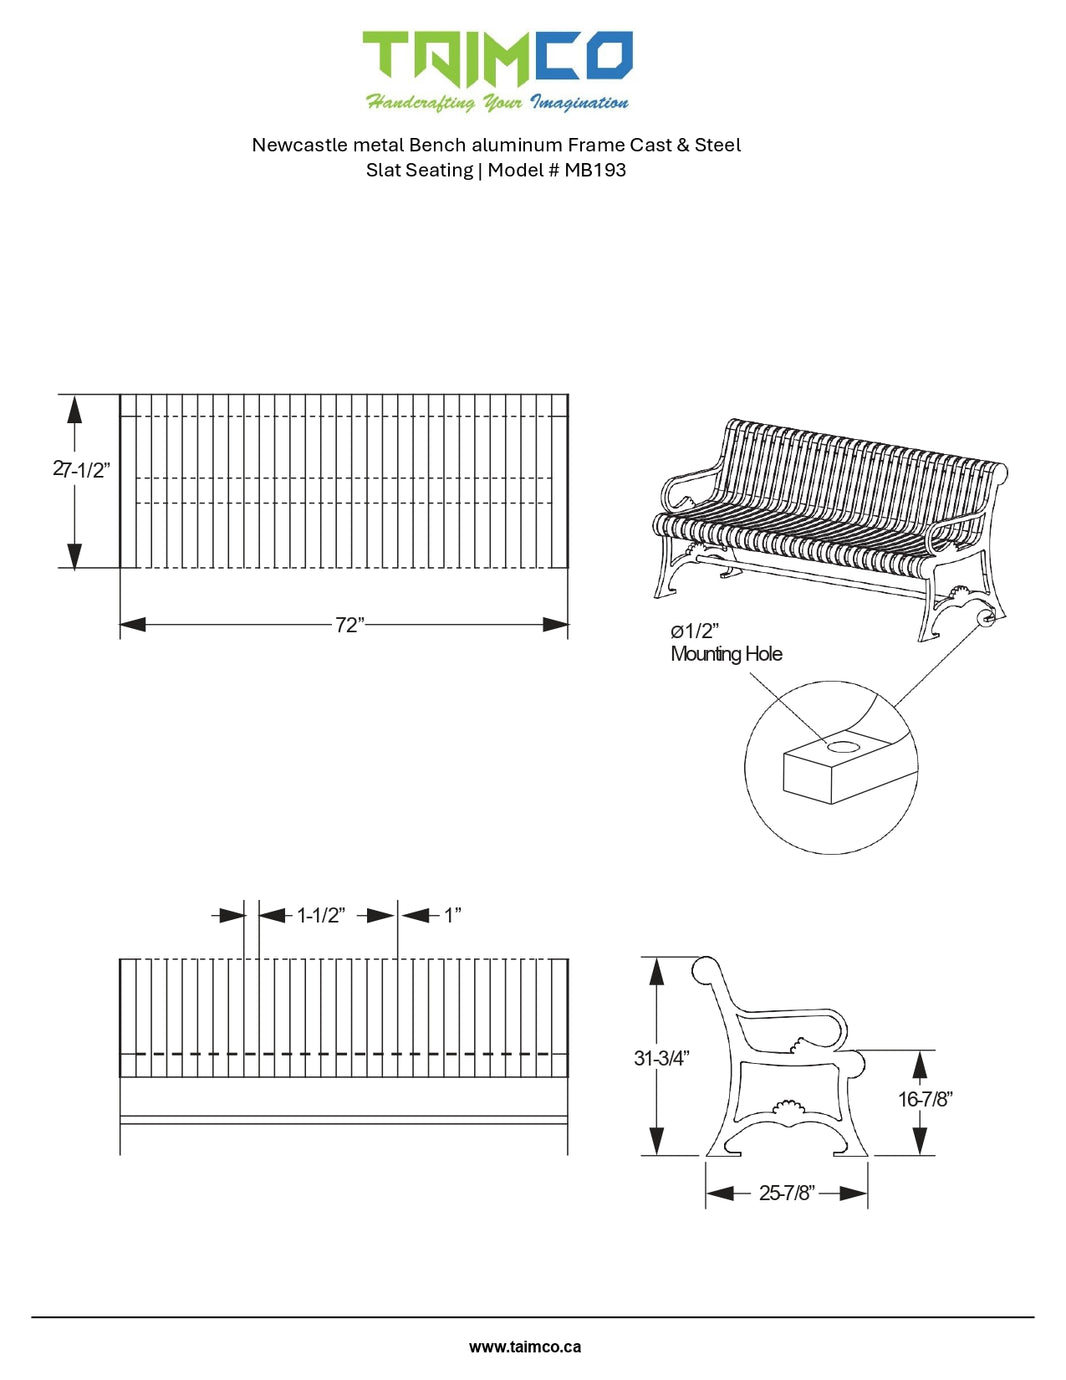 Newcastle metal Bench aluminum Frame Cast & Steel Slat Seating | Model # MB193